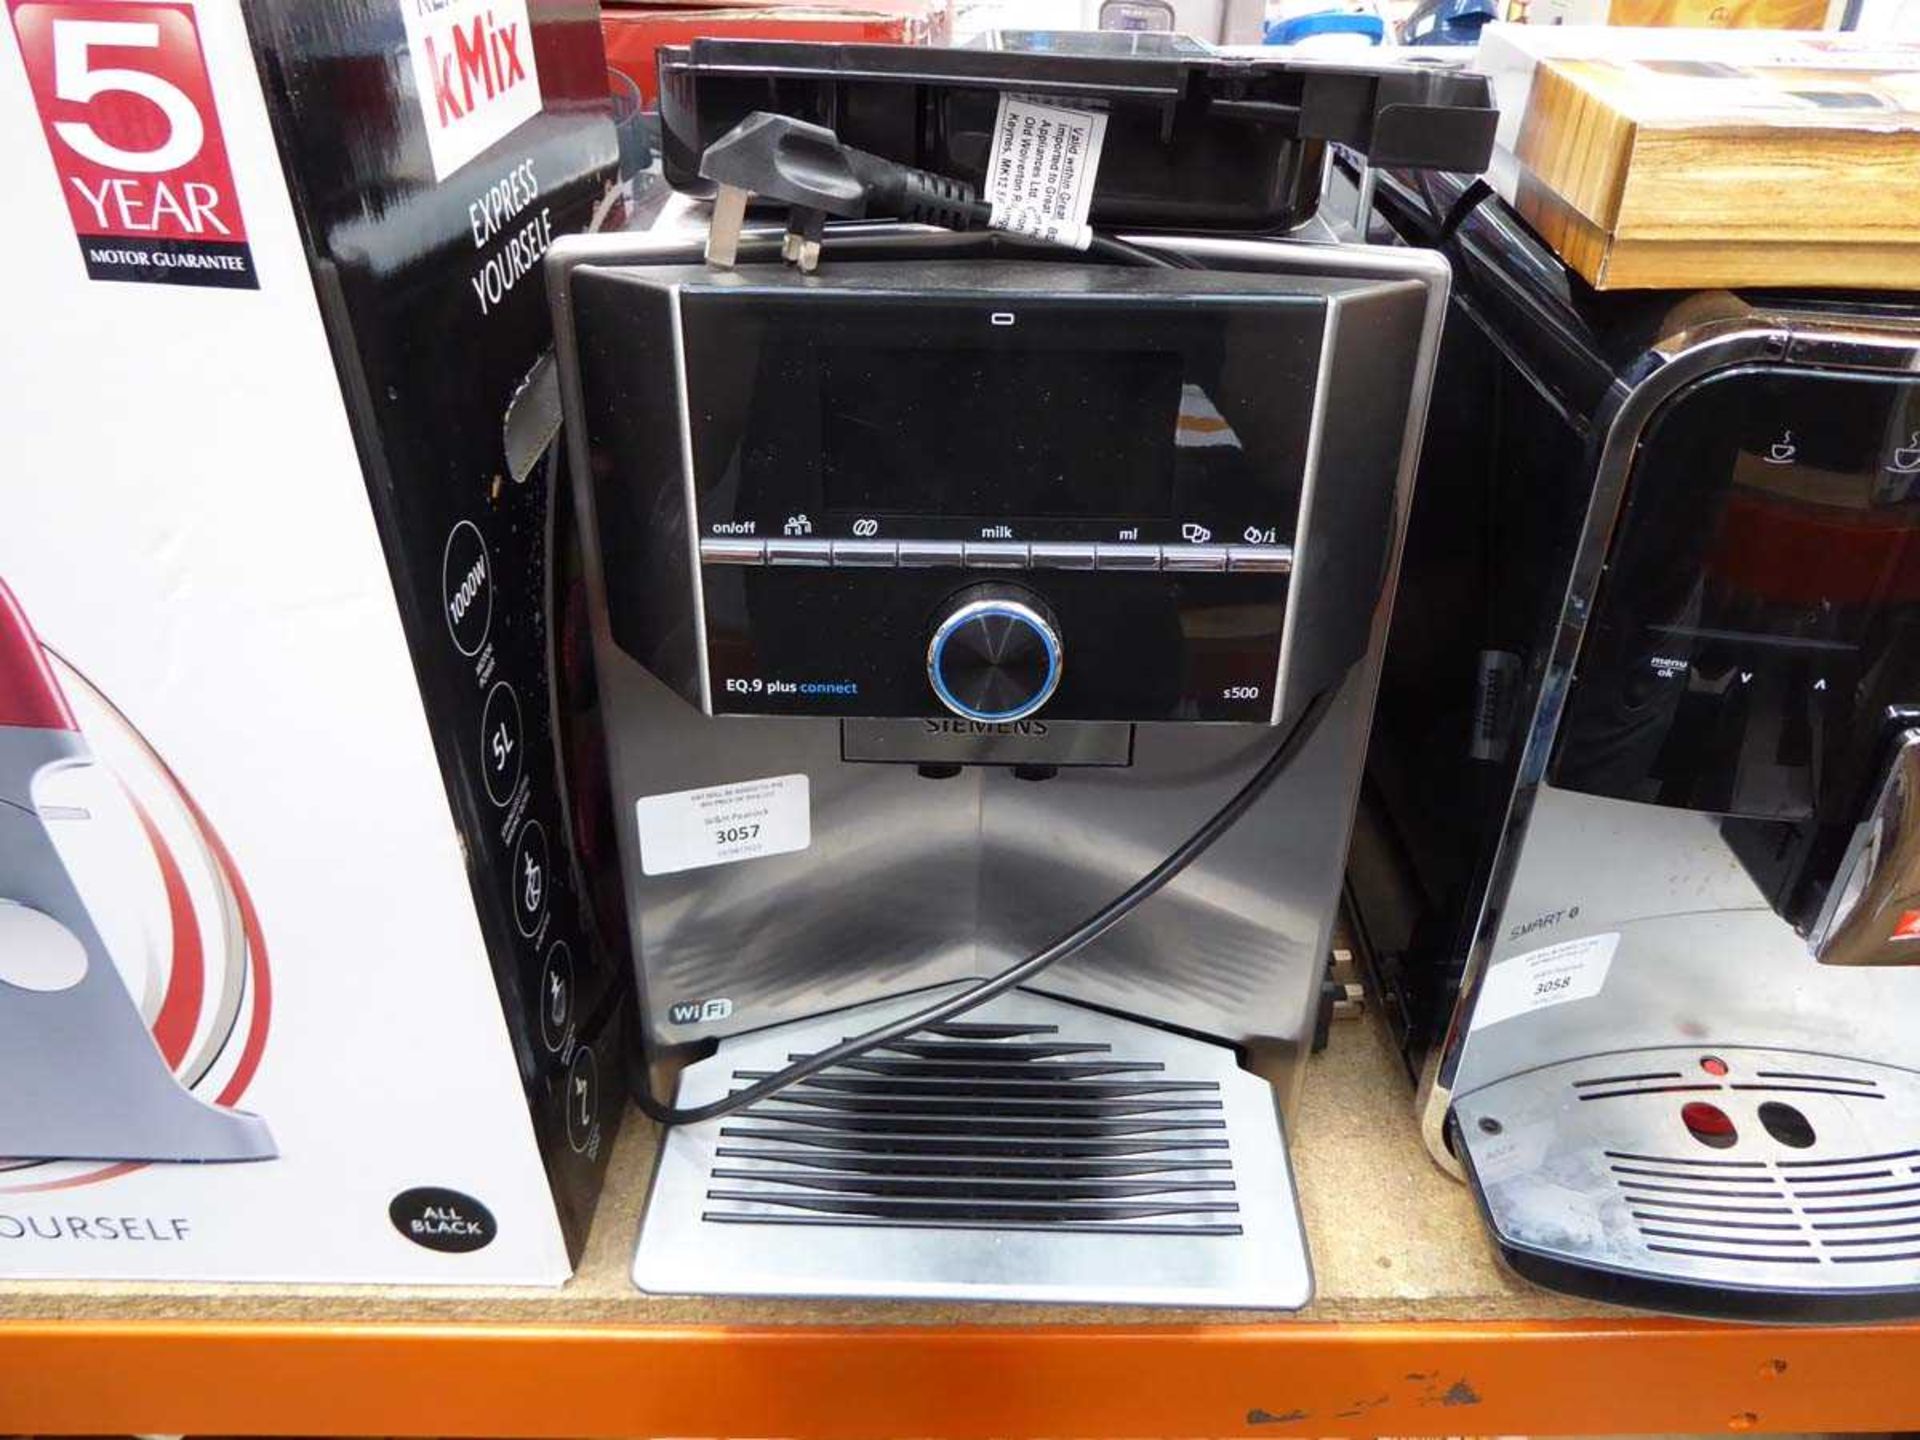 +VAT Unboxed Siemens coffee machine